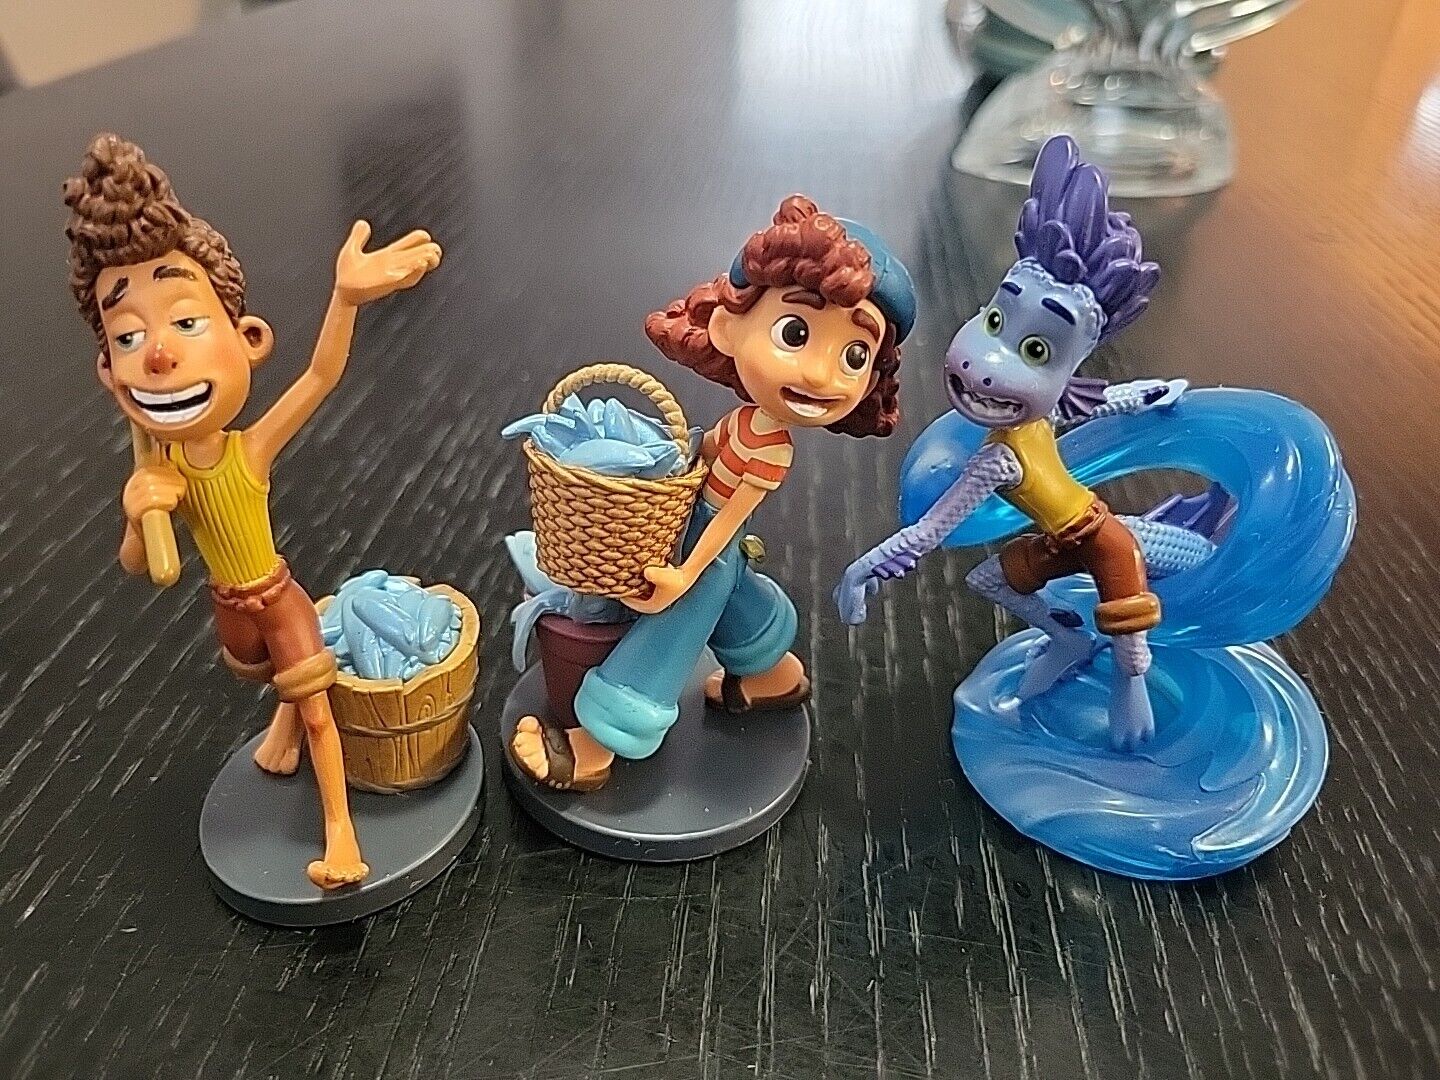 Disney Store Pixar Luca Alburto 3 Figurine Play Set Cake Topper Figures 